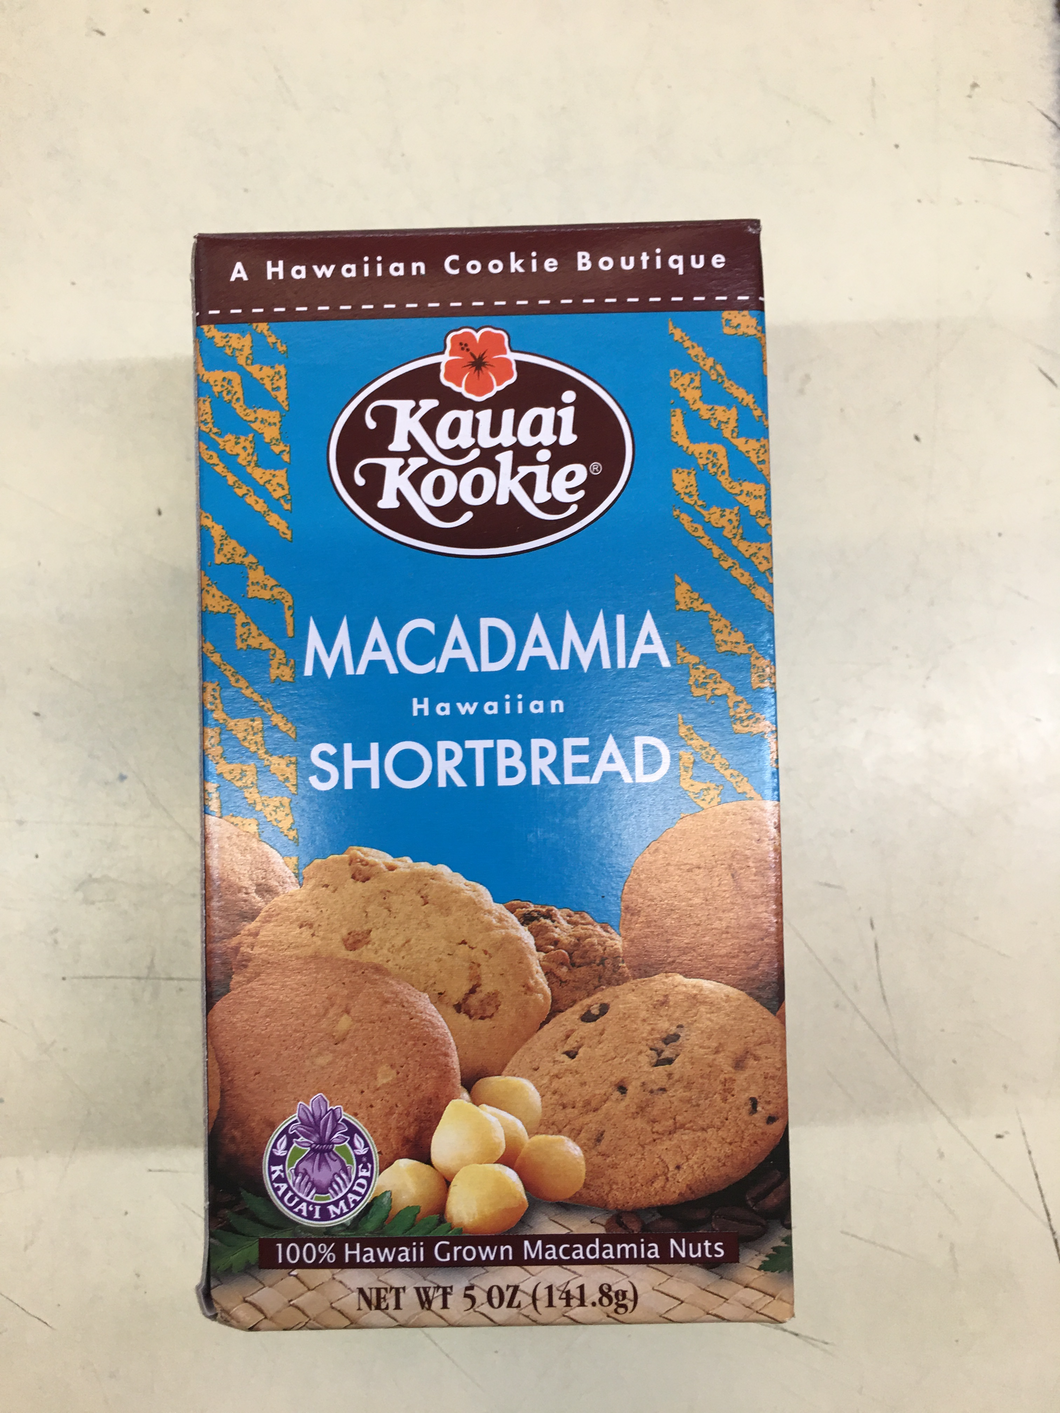 Kauai Kookie Macadamia Shortbread